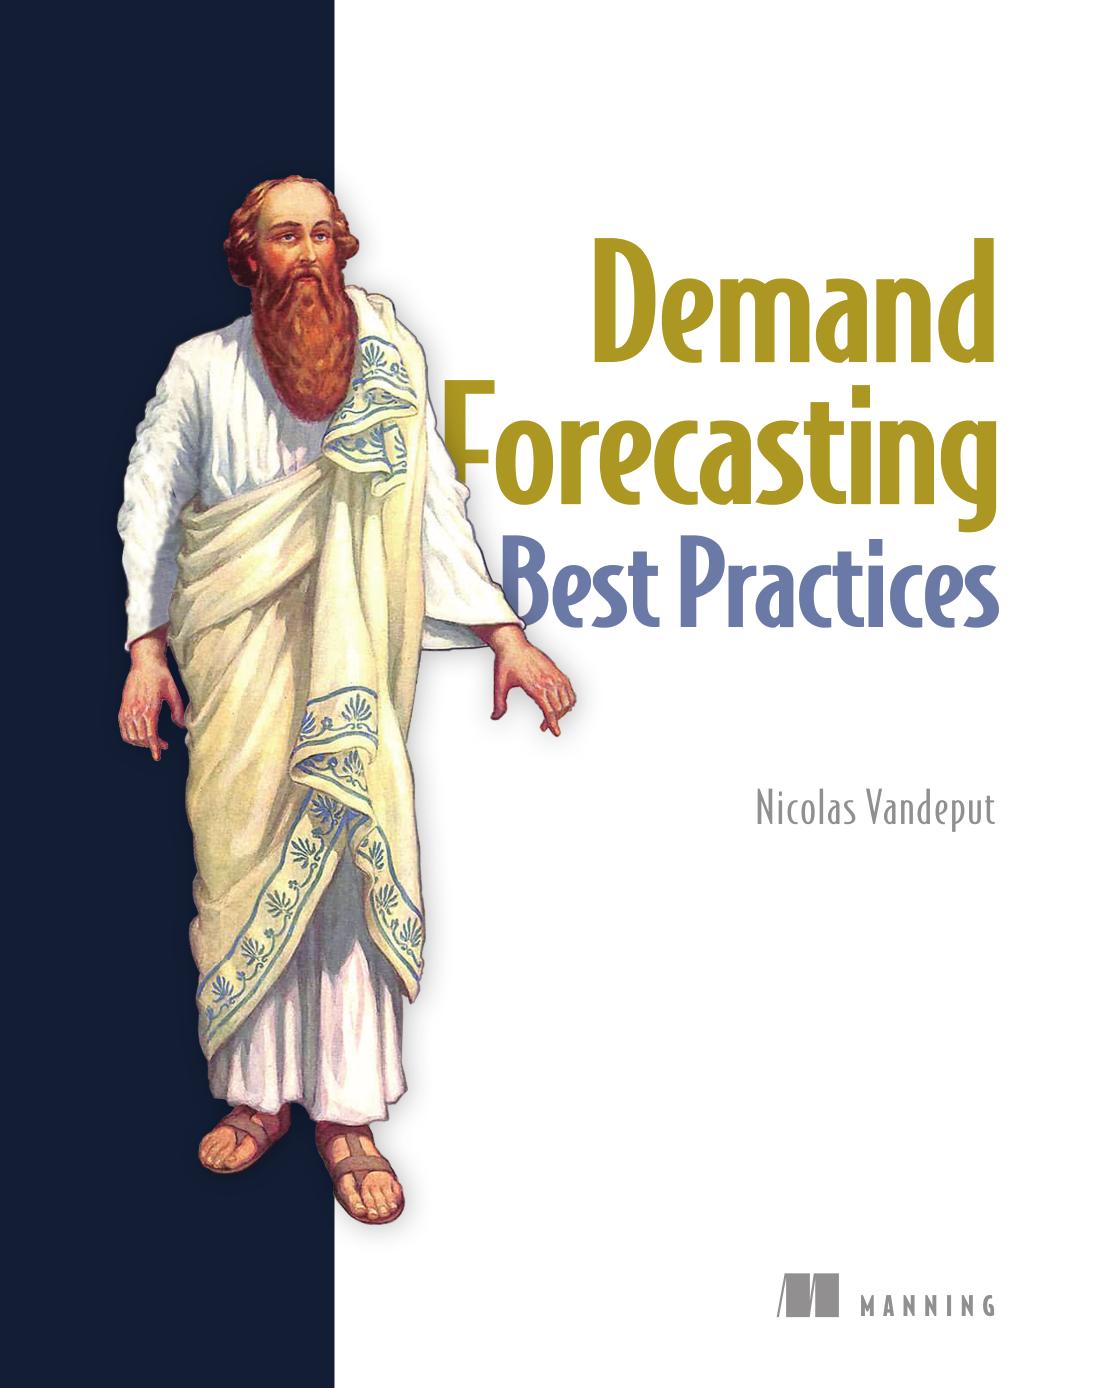 Demand Forecasting Best Practices by Nicolas Vandeput